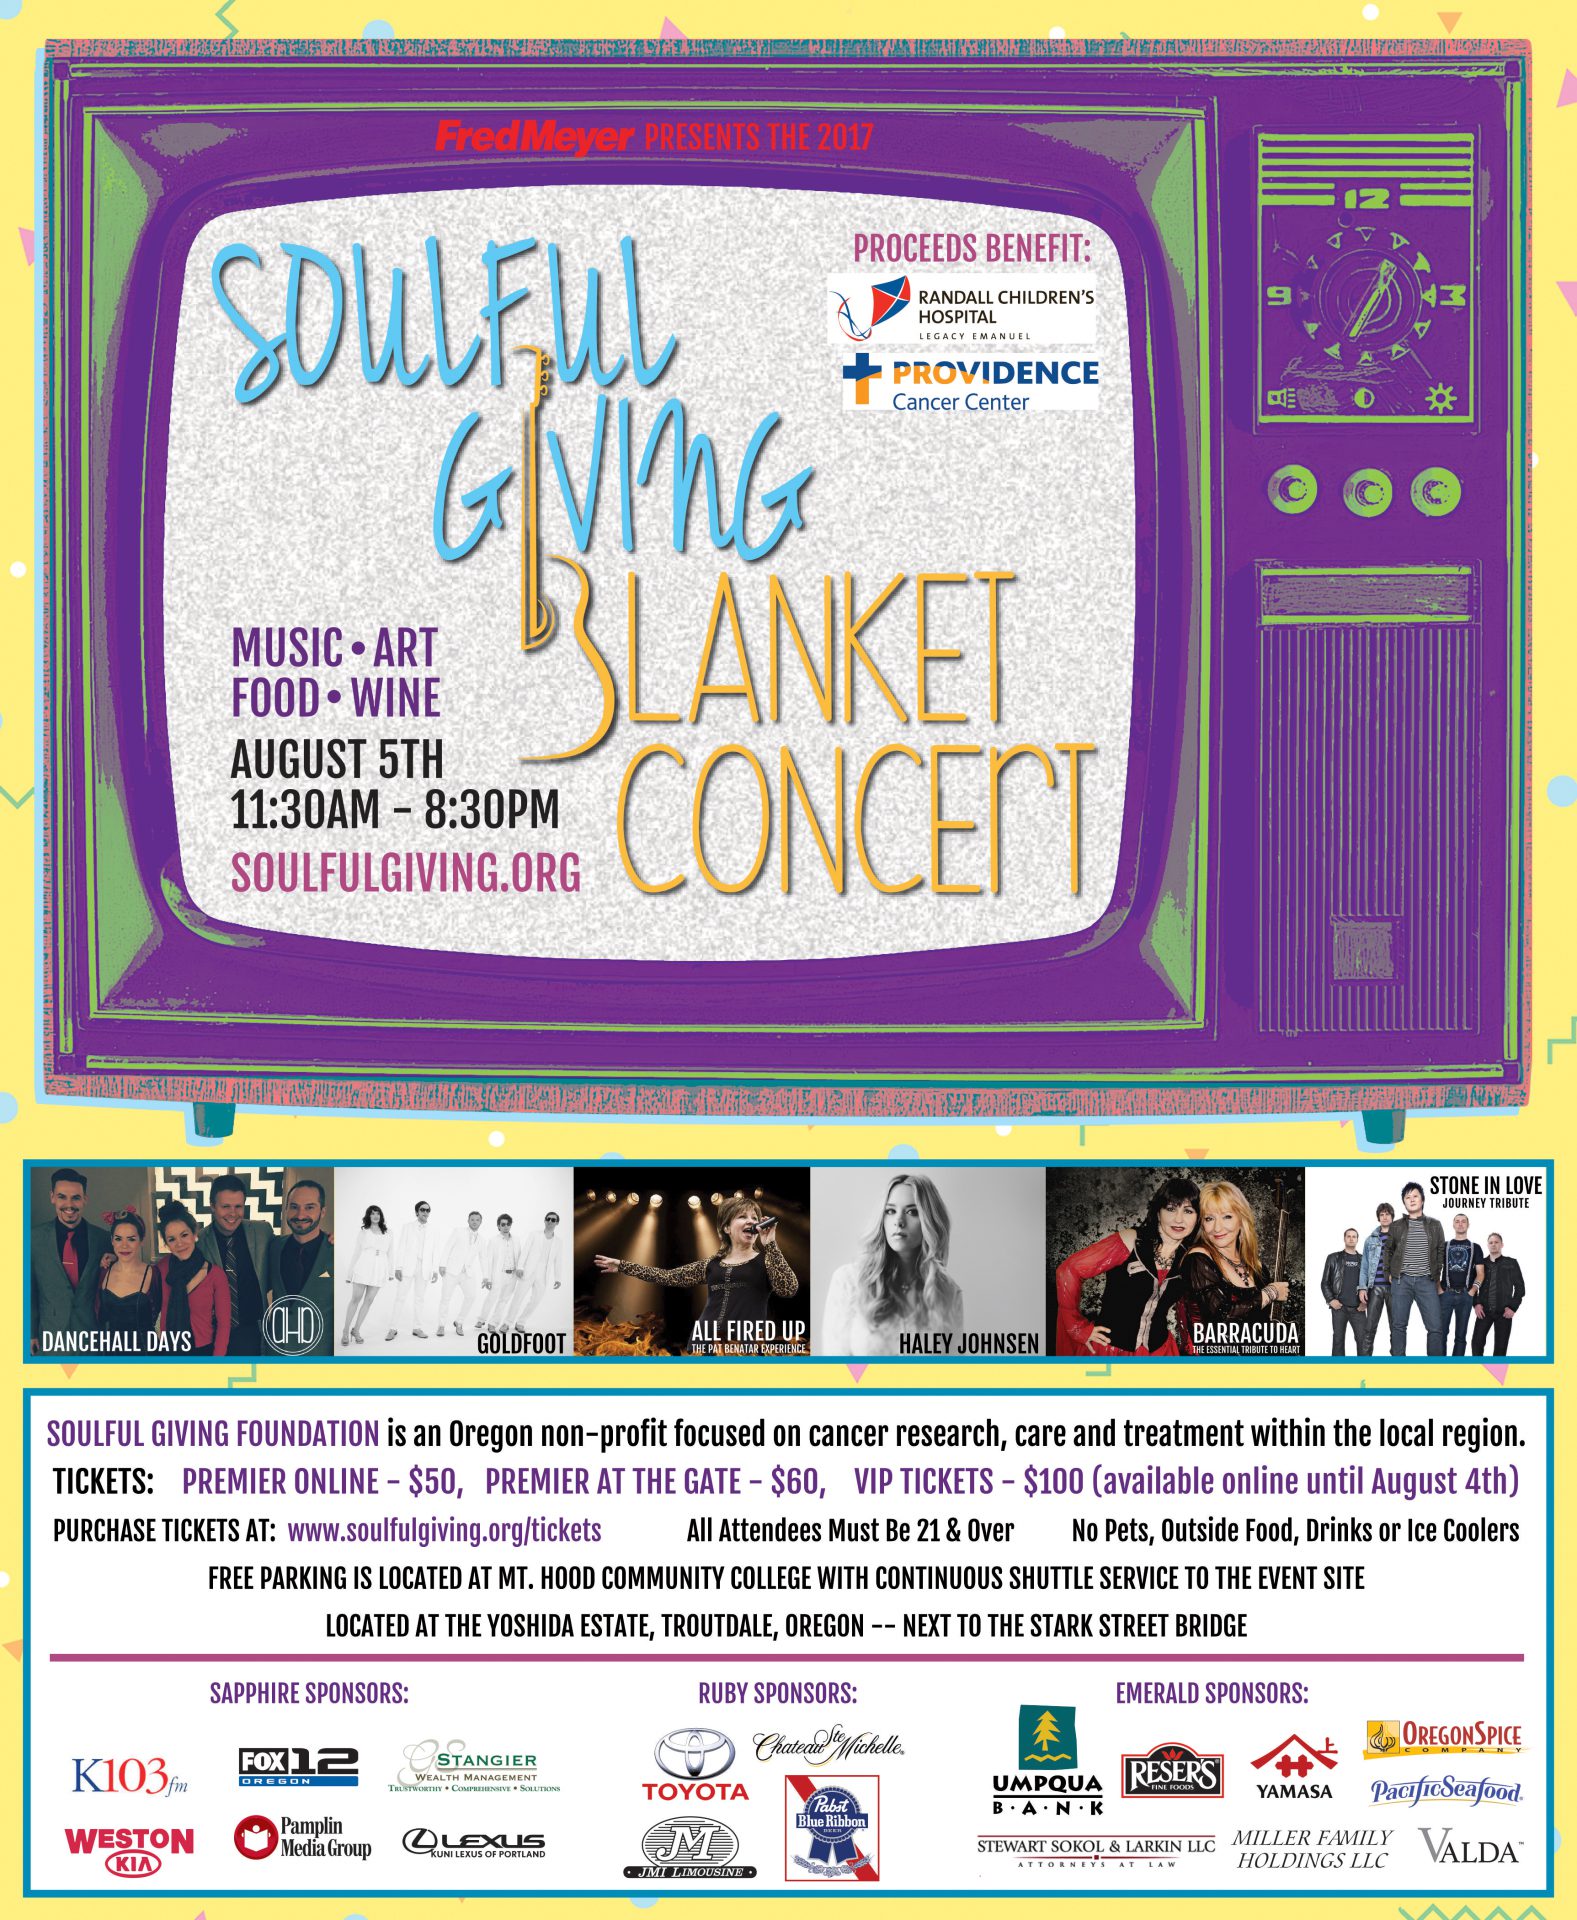 Soulful Giving Blanket Concert Poster 2017